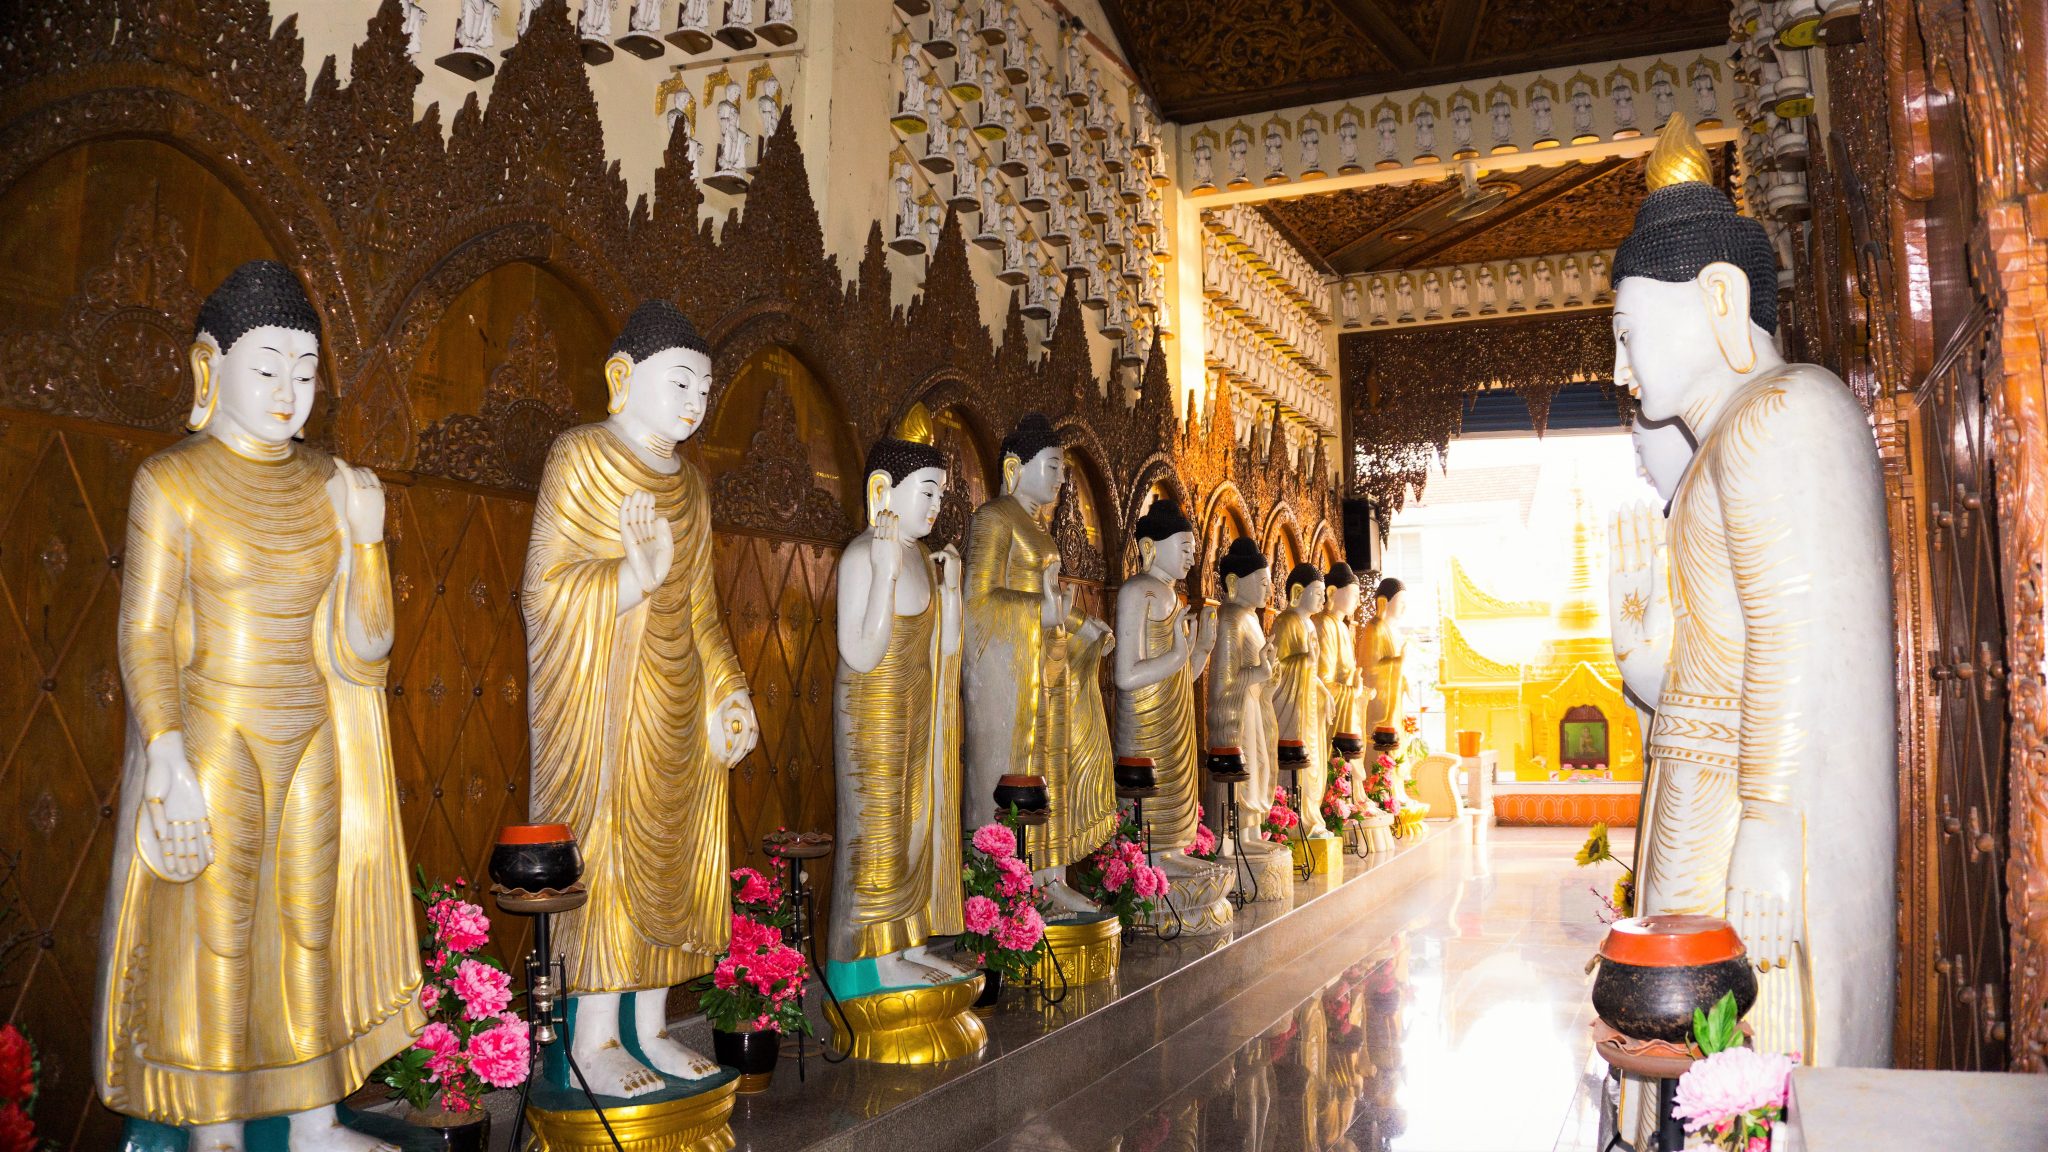 Penang temple inside